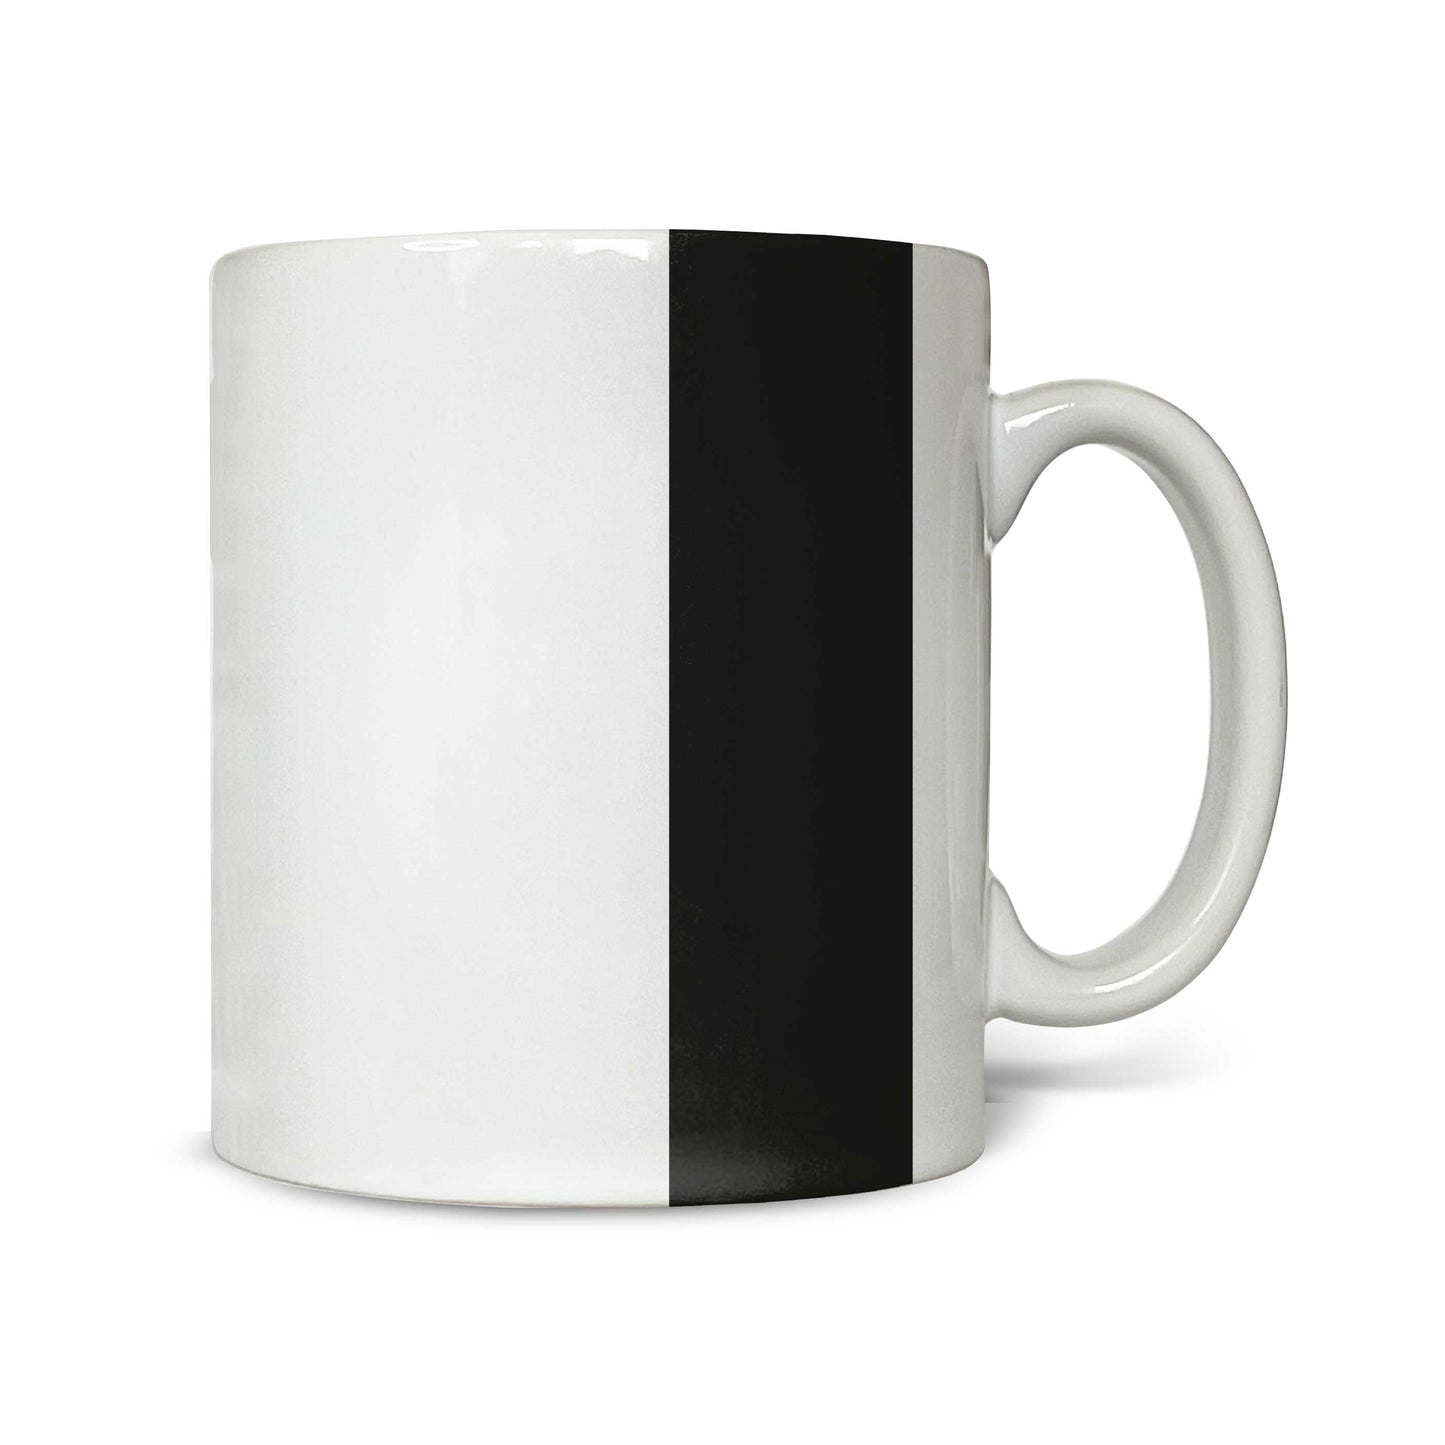 Robcour Full Colour Mug - Mug - Hacked Up